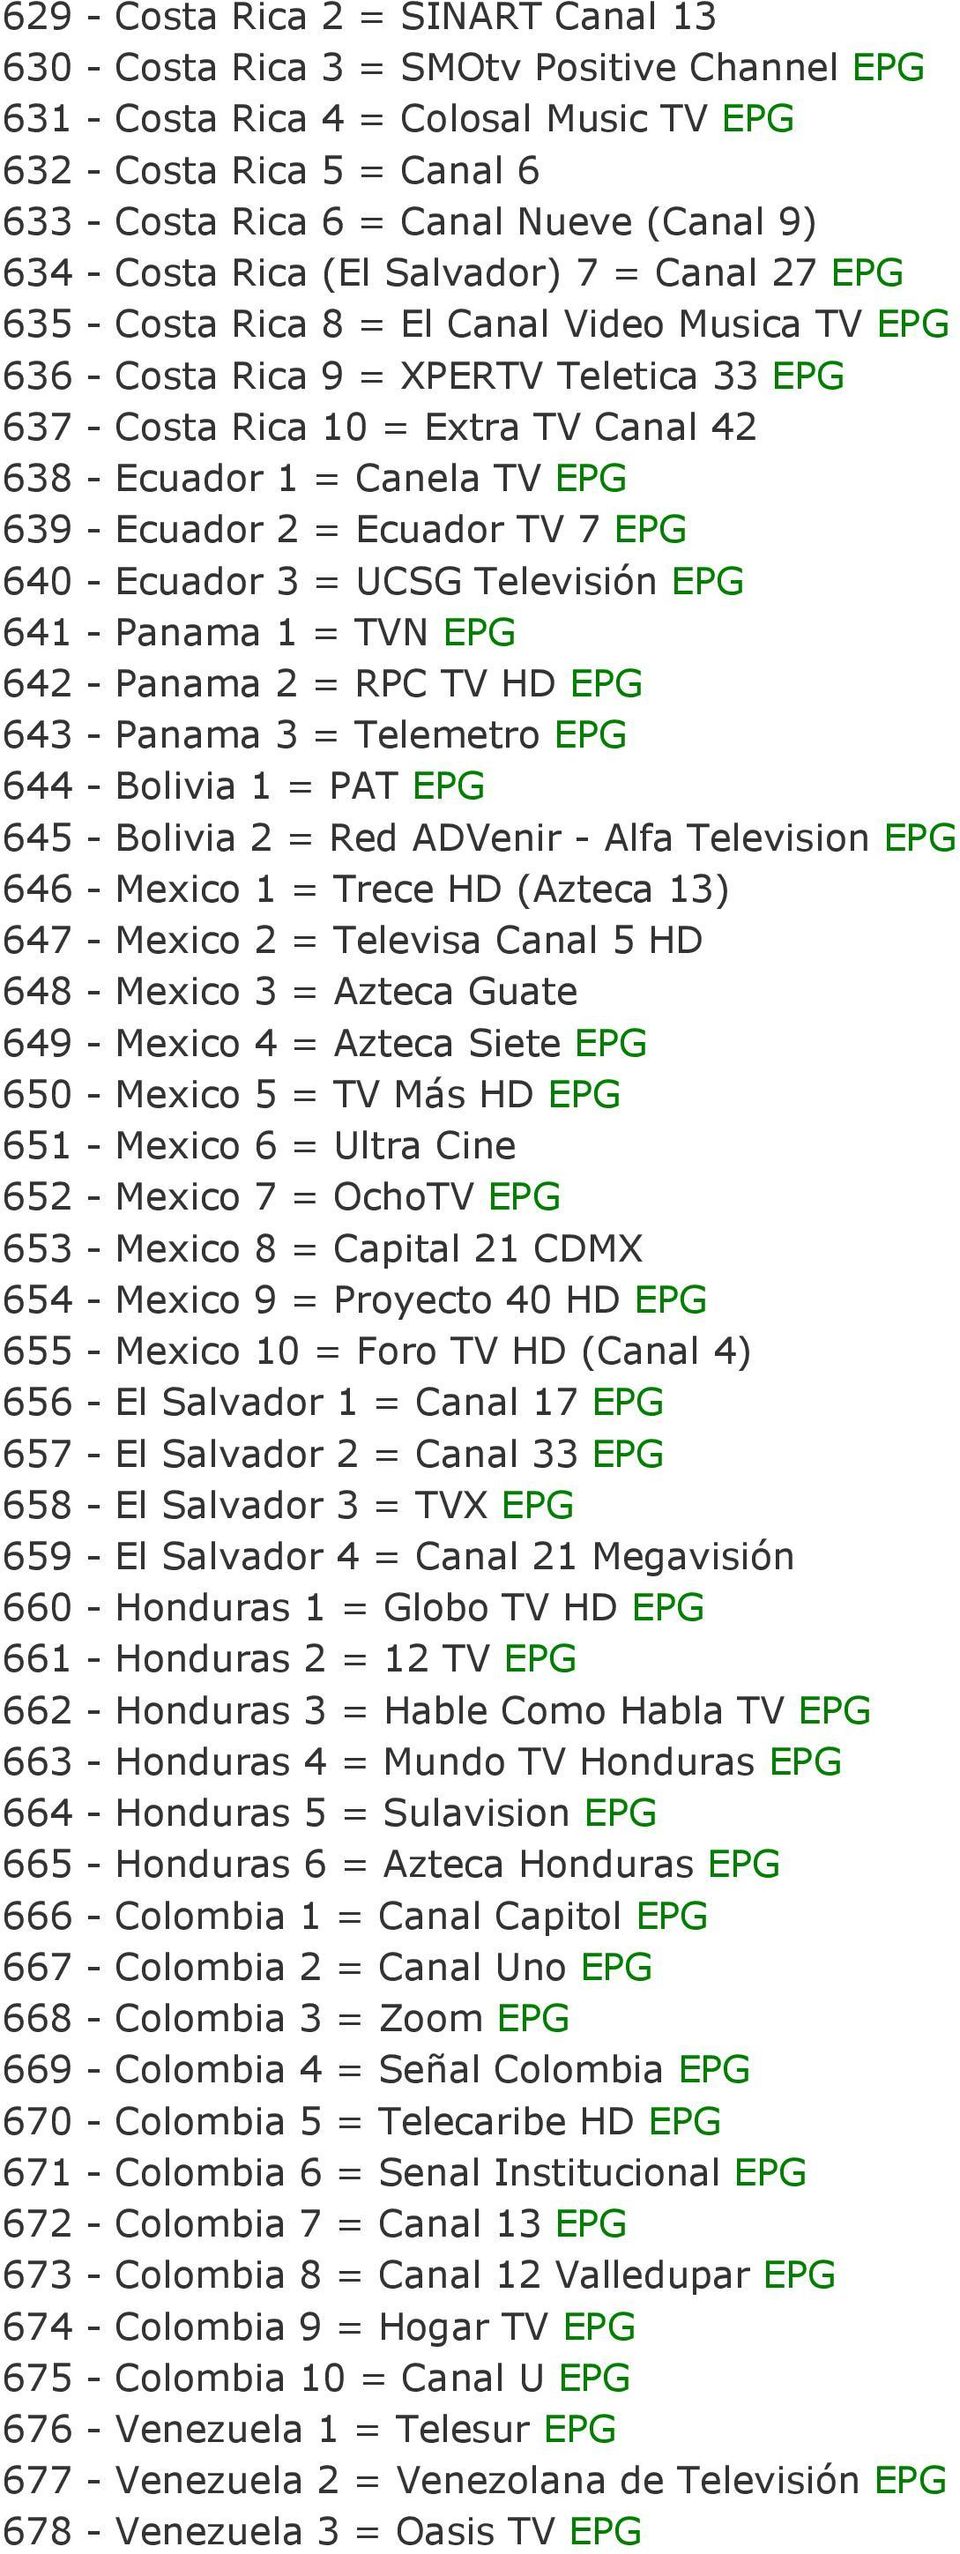 Canela TV EPG 639 - Ecuador 2 = Ecuador TV 7 EPG 640 - Ecuador 3 = UCSG Televisión EPG 641 - Panama 1 = TVN EPG 642 - Panama 2 = RPC TV HD EPG 643 - Panama 3 = Telemetro EPG 644 - Bolivia 1 = PAT EPG